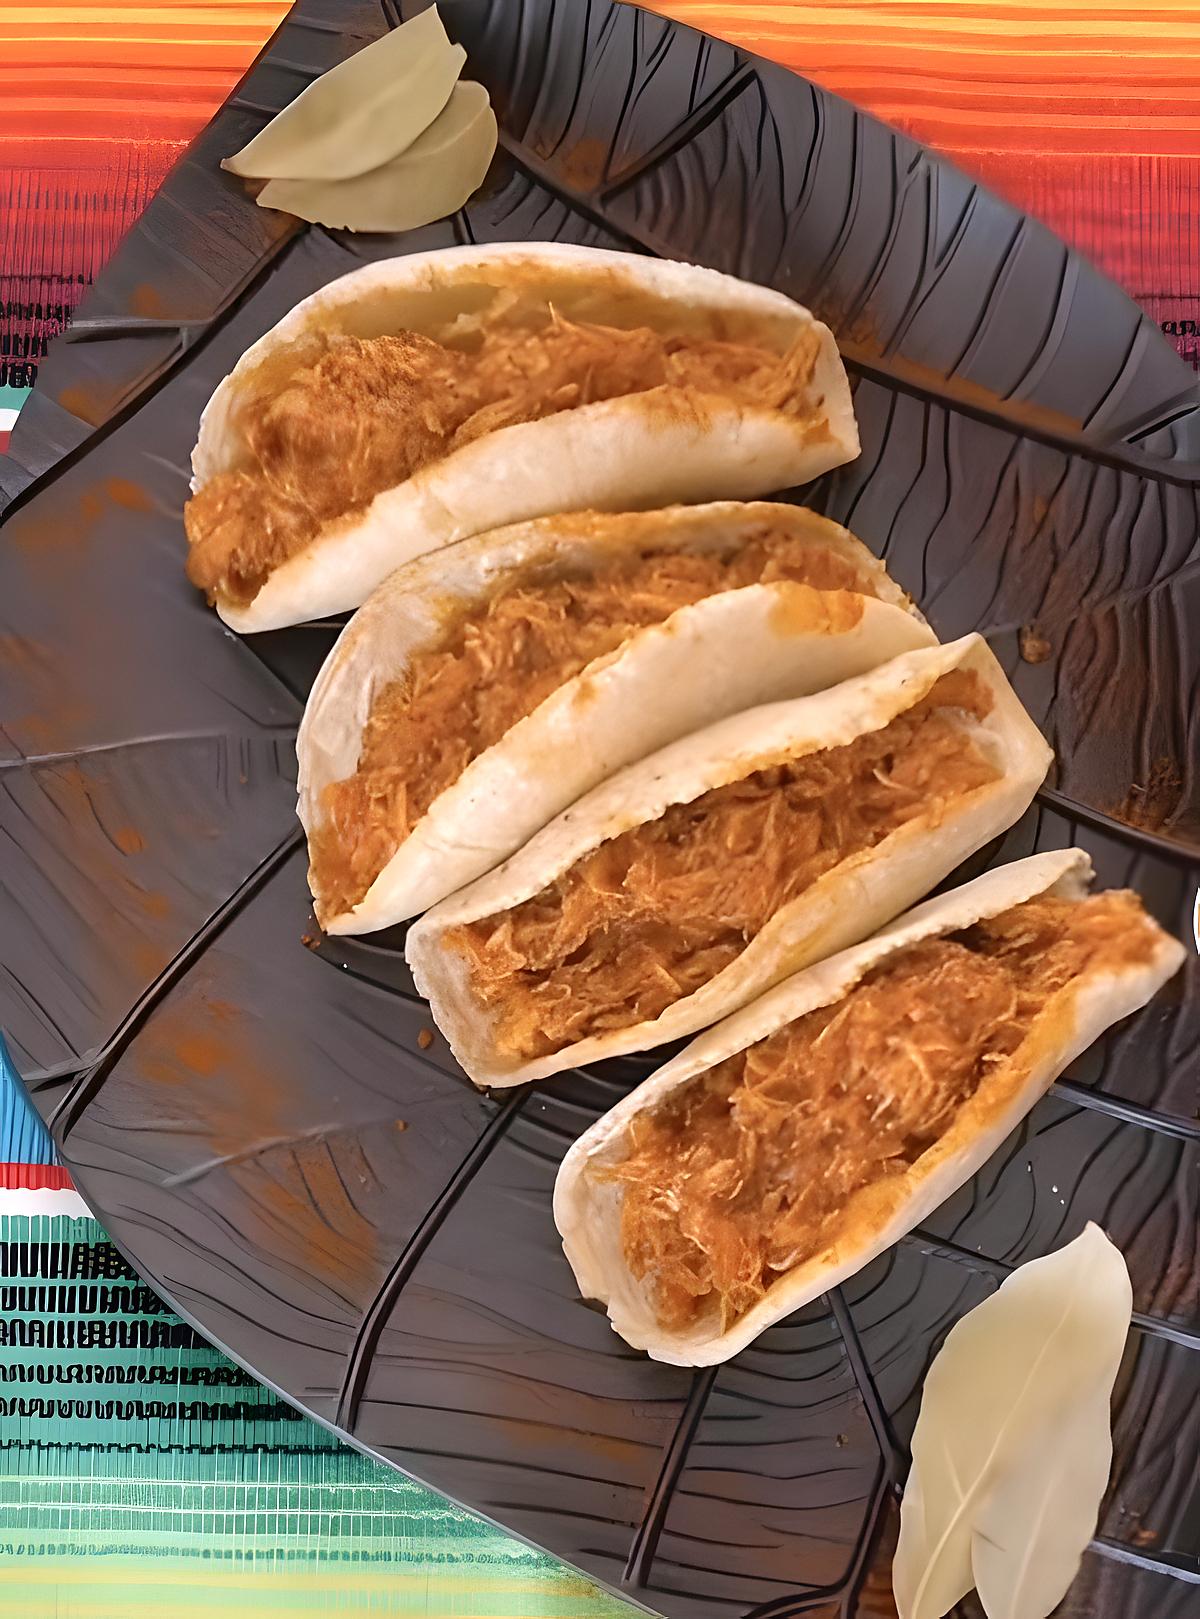 recette Vrai tacos mexicain (tingadepollo)